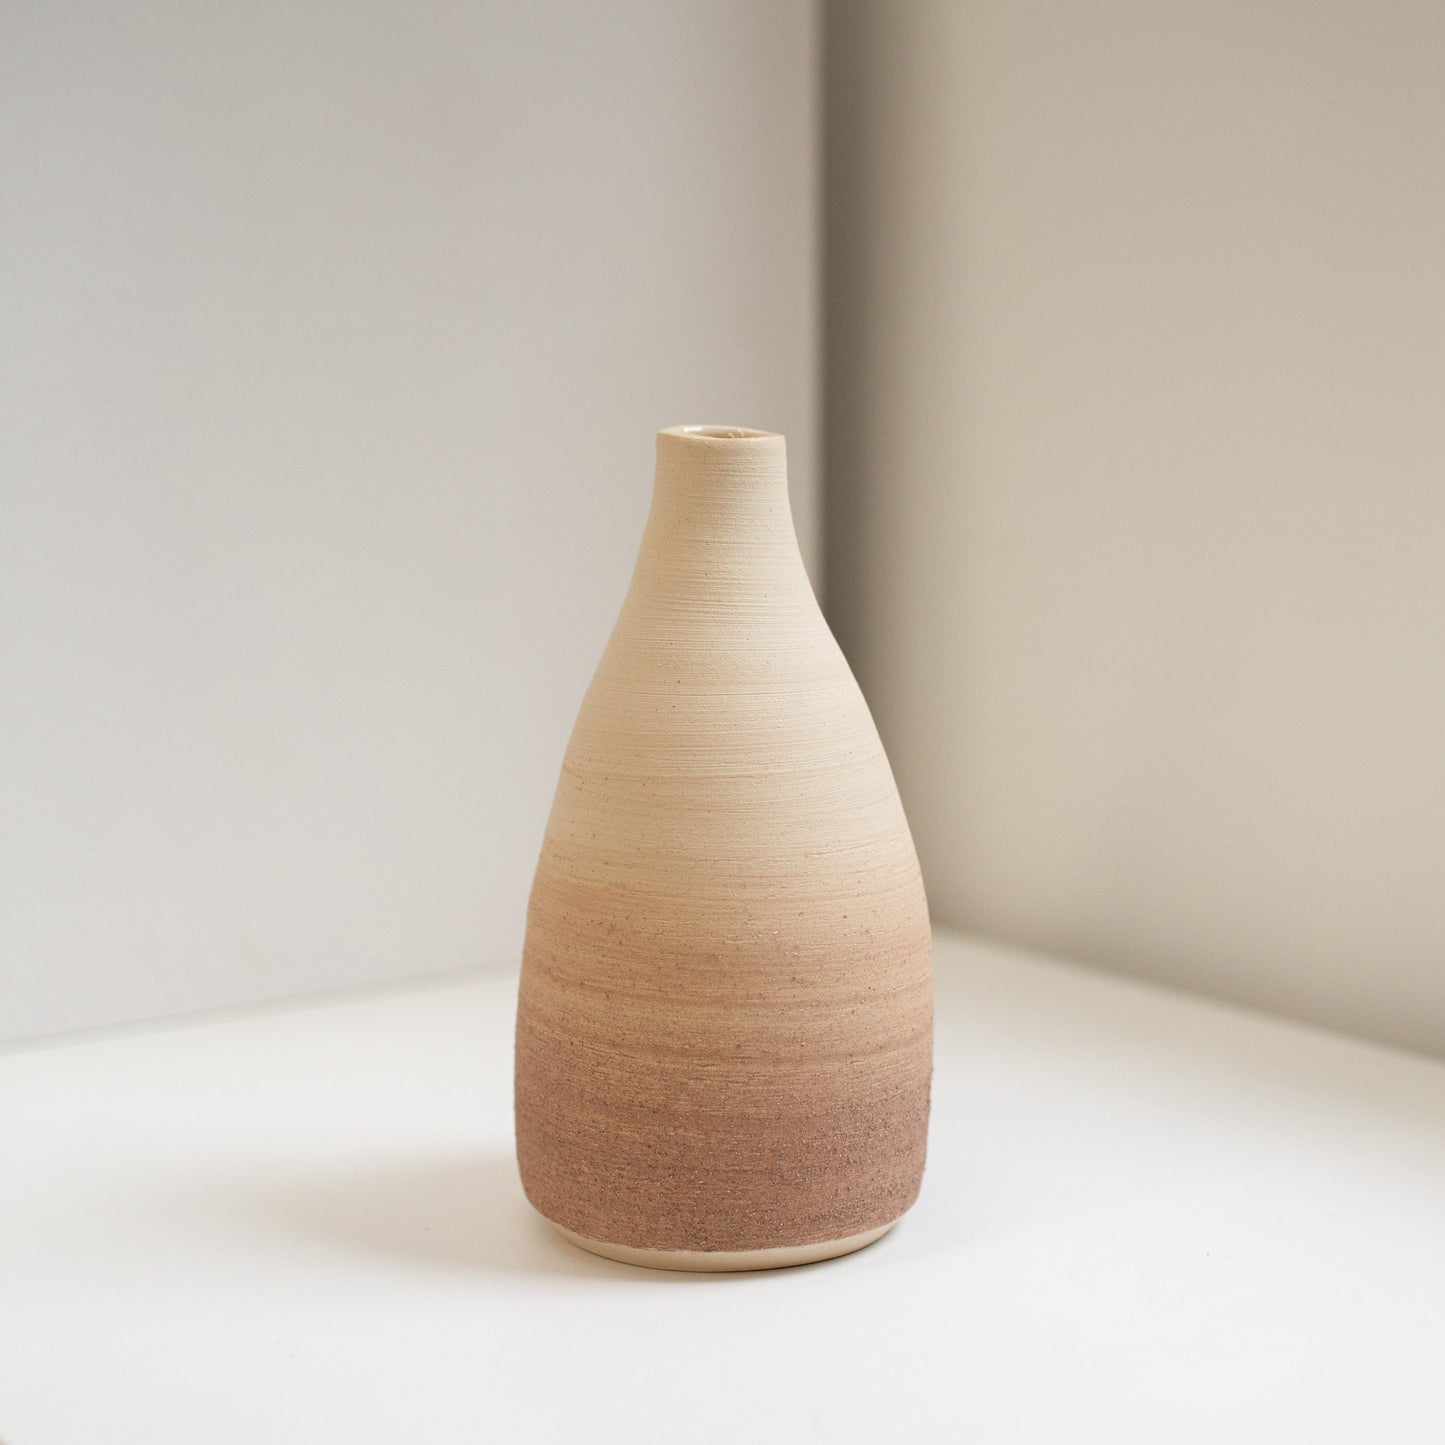 Muriwai Wild Clay Vase #1